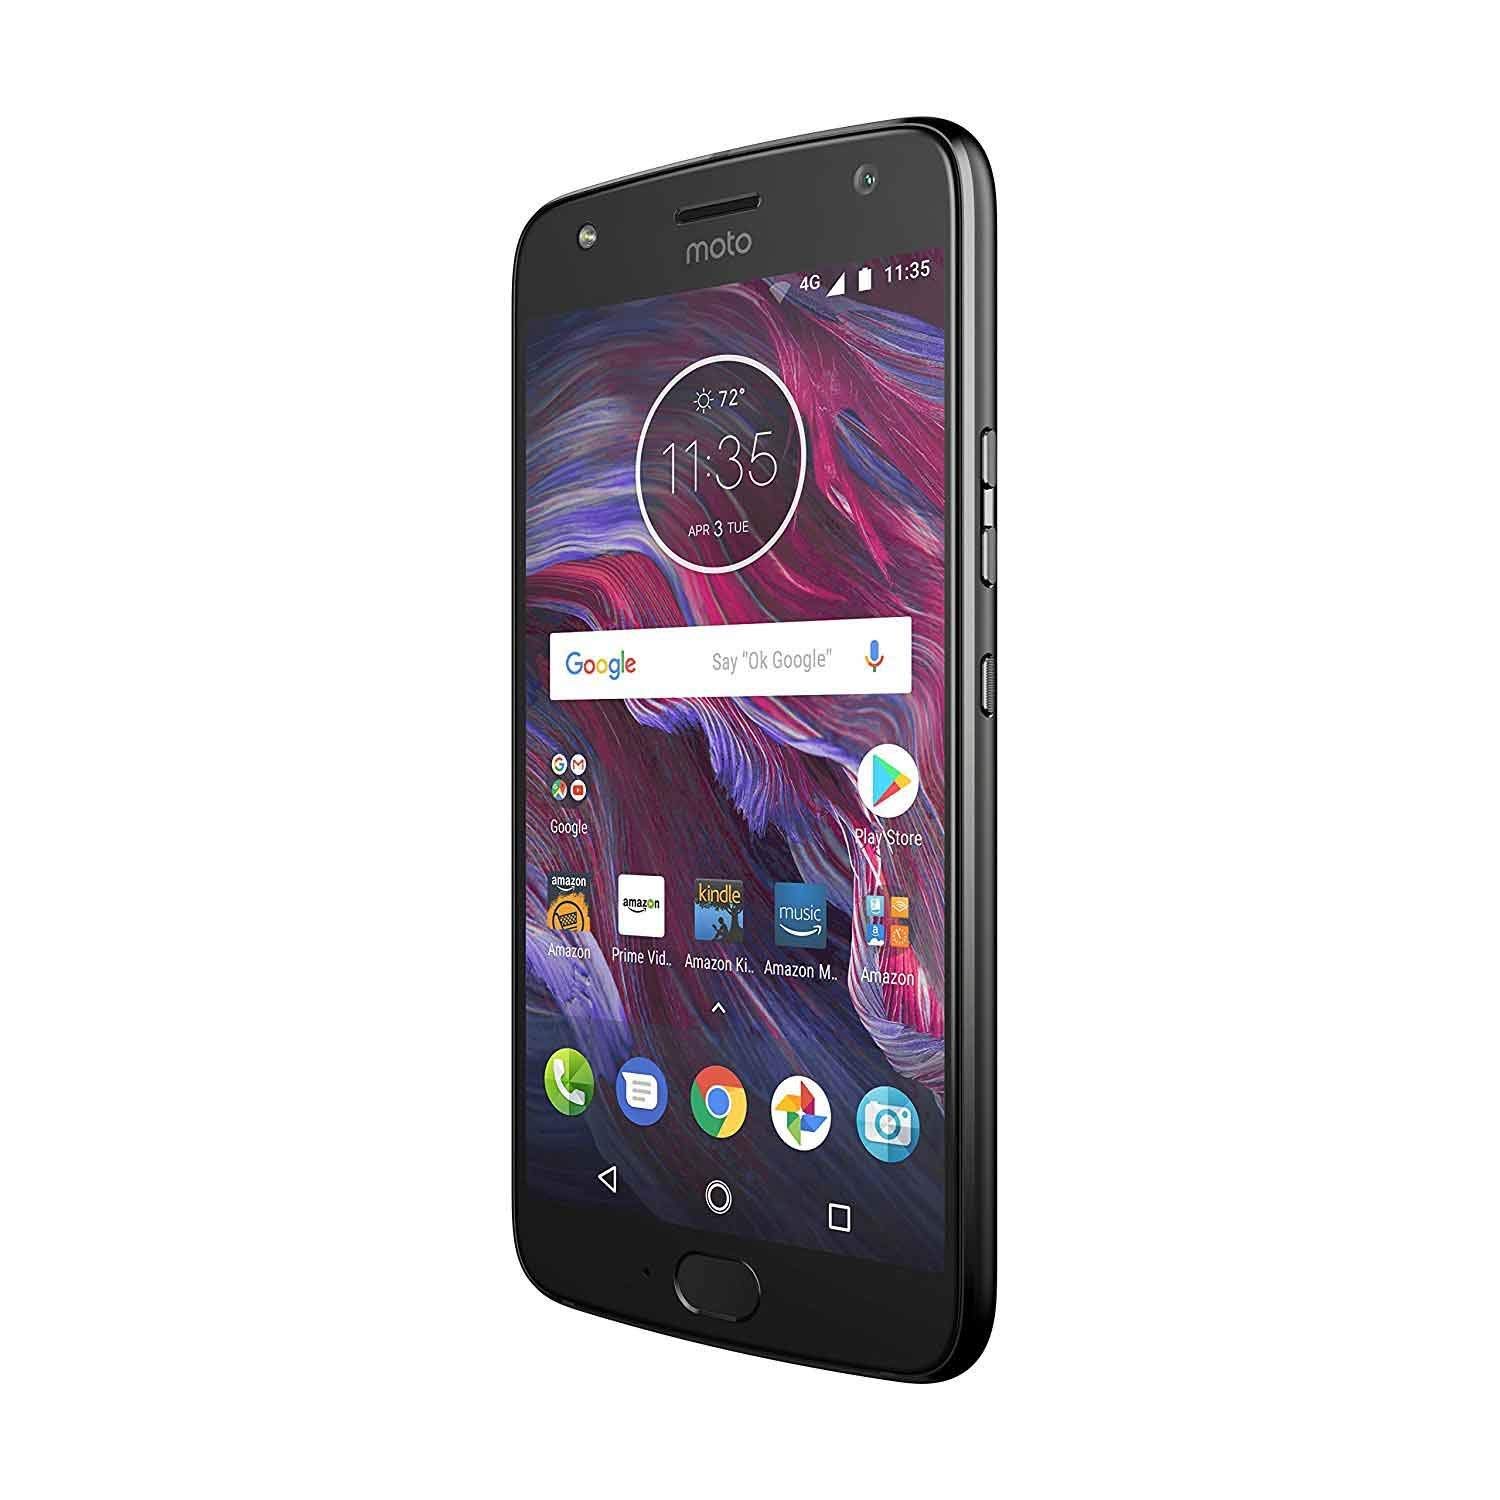 Moto X (4th Generation) with Alexa Hands-Free – 32 GB - Unlocked – Super Black - Prime Exclusive